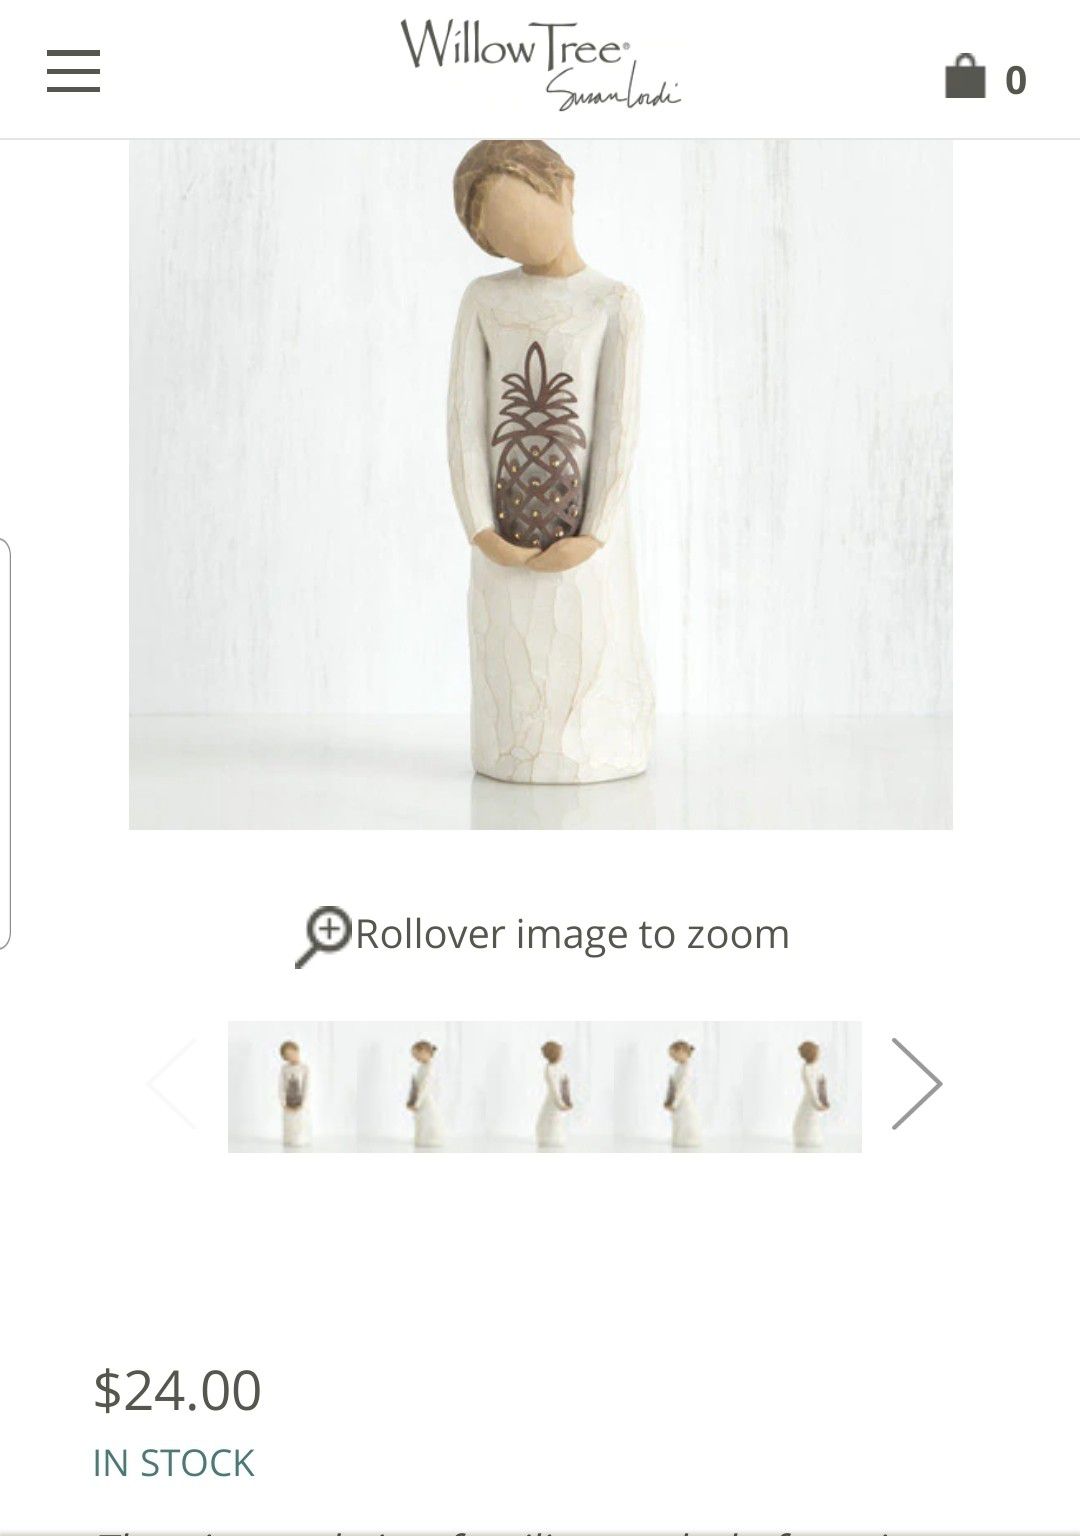 willow tree figurine